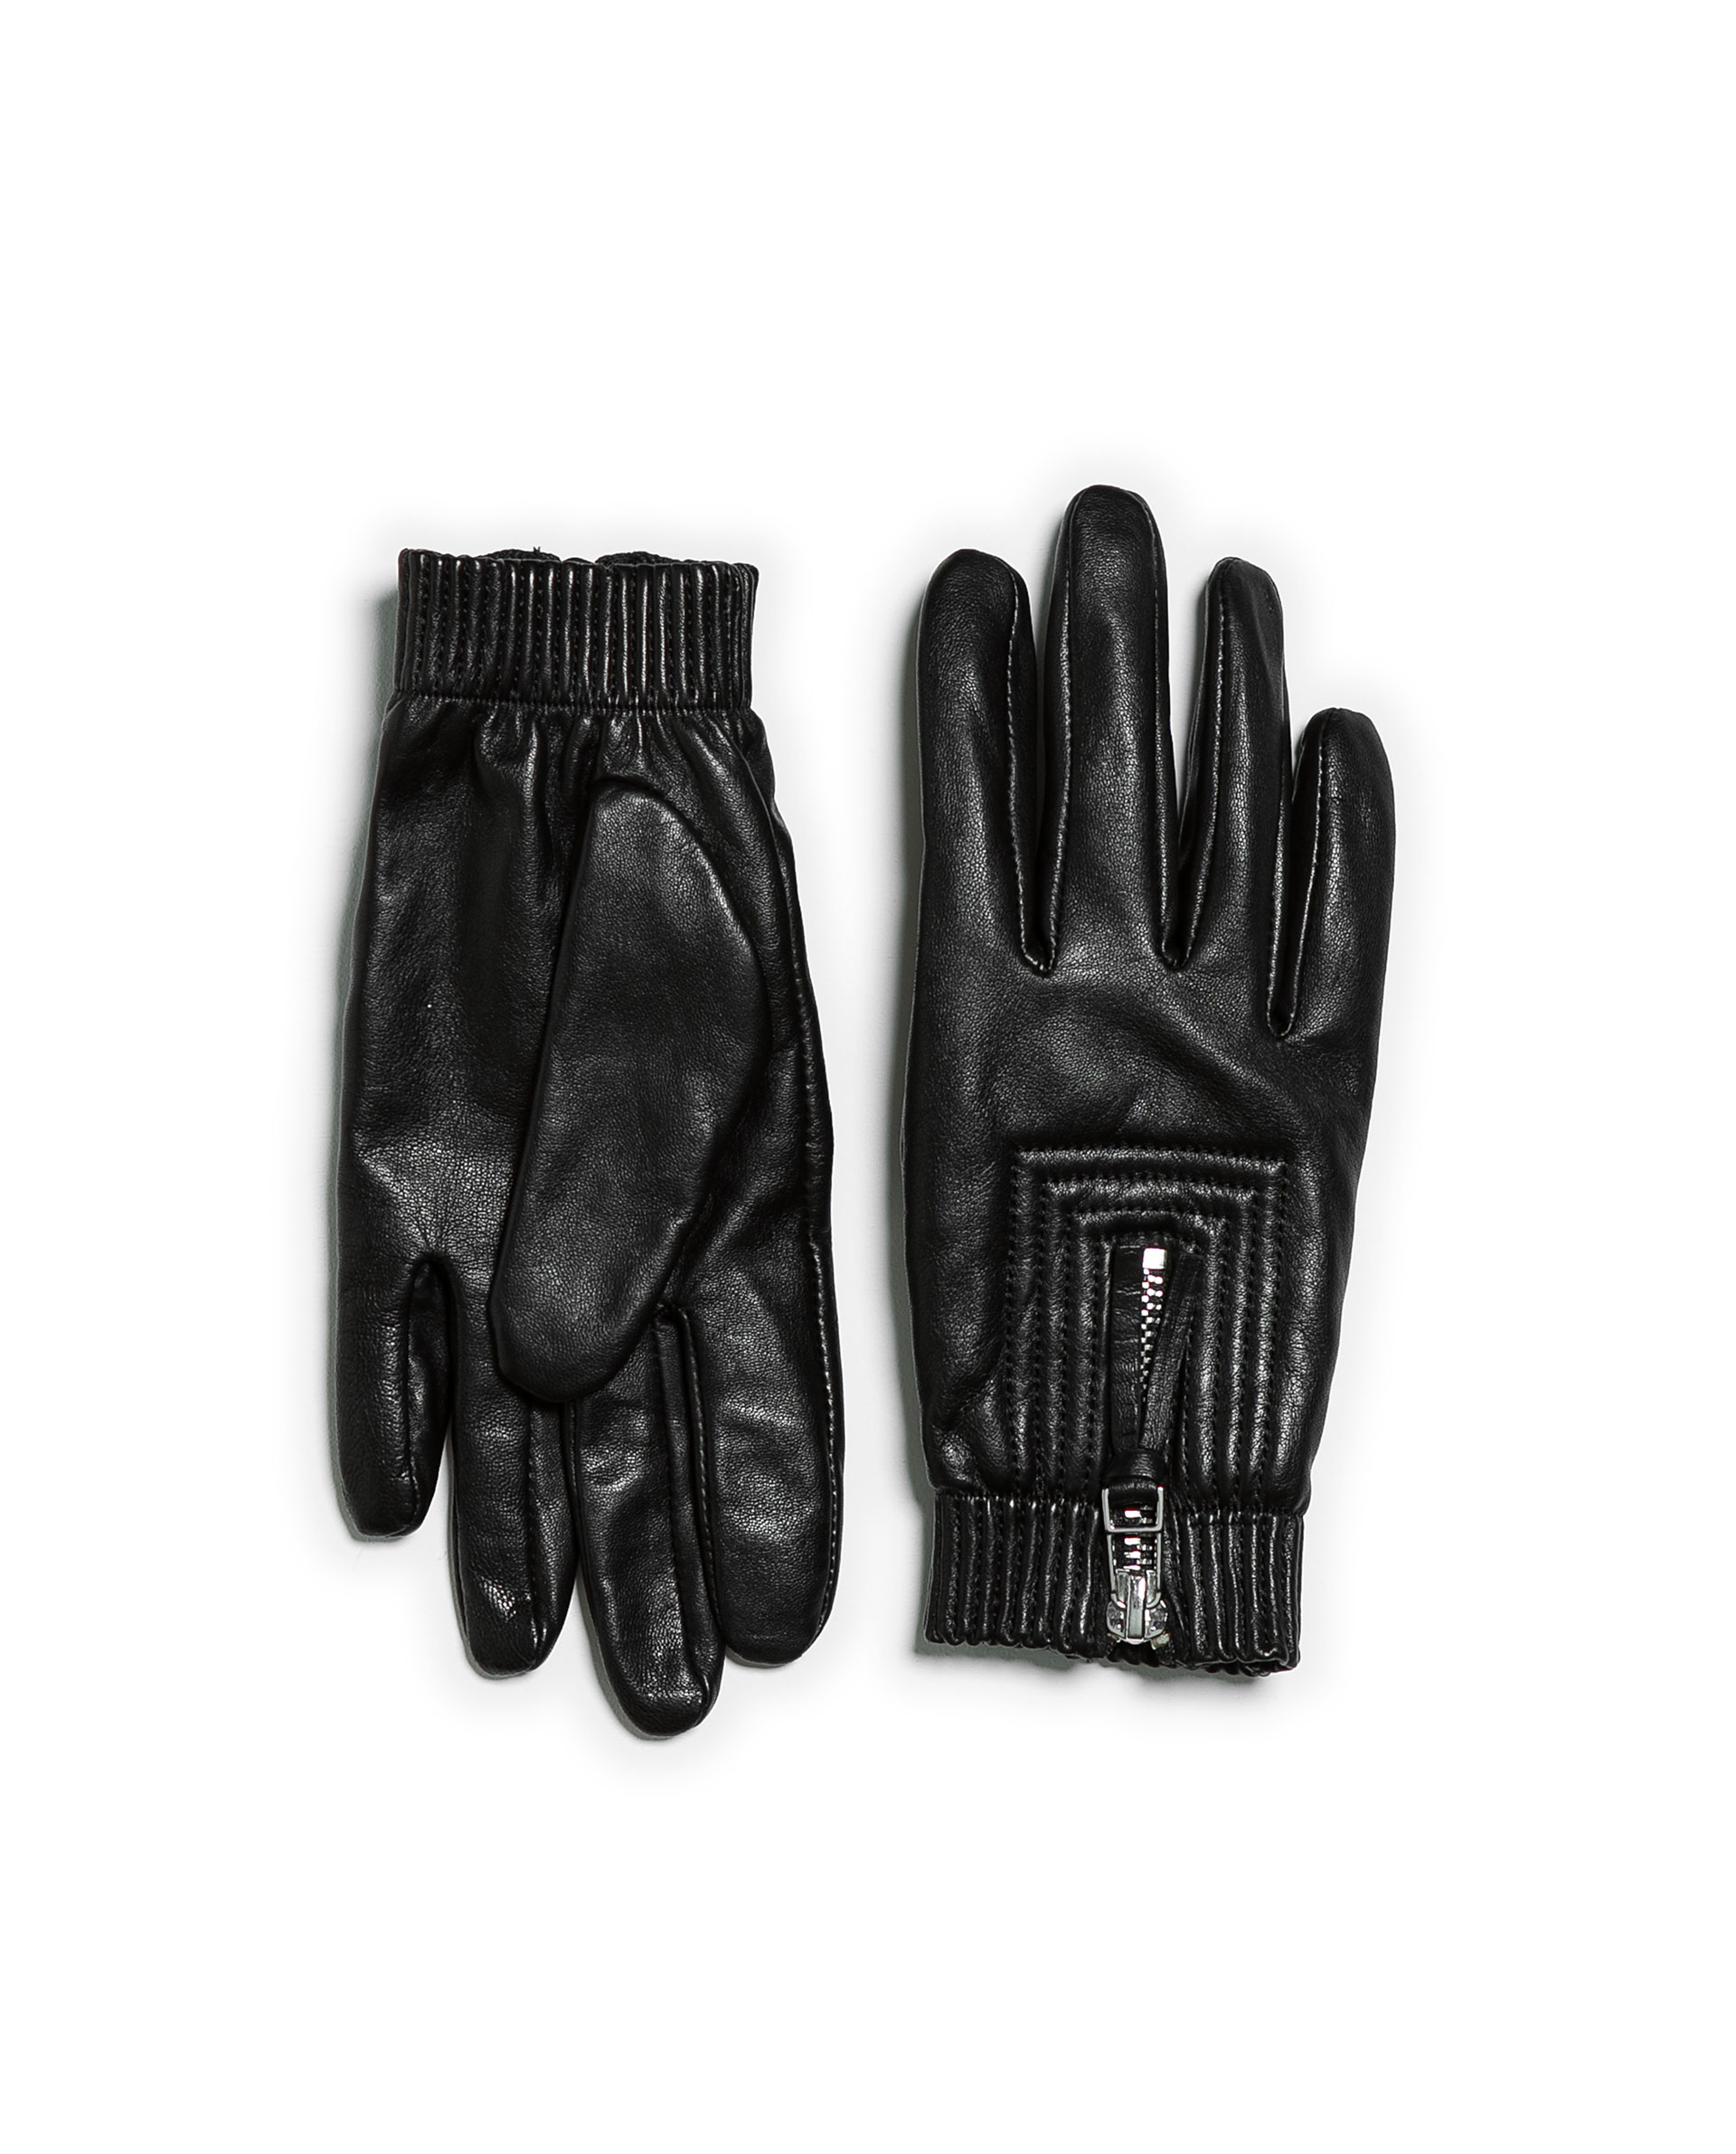 Zara Leather Gloves Nude Pics 2018